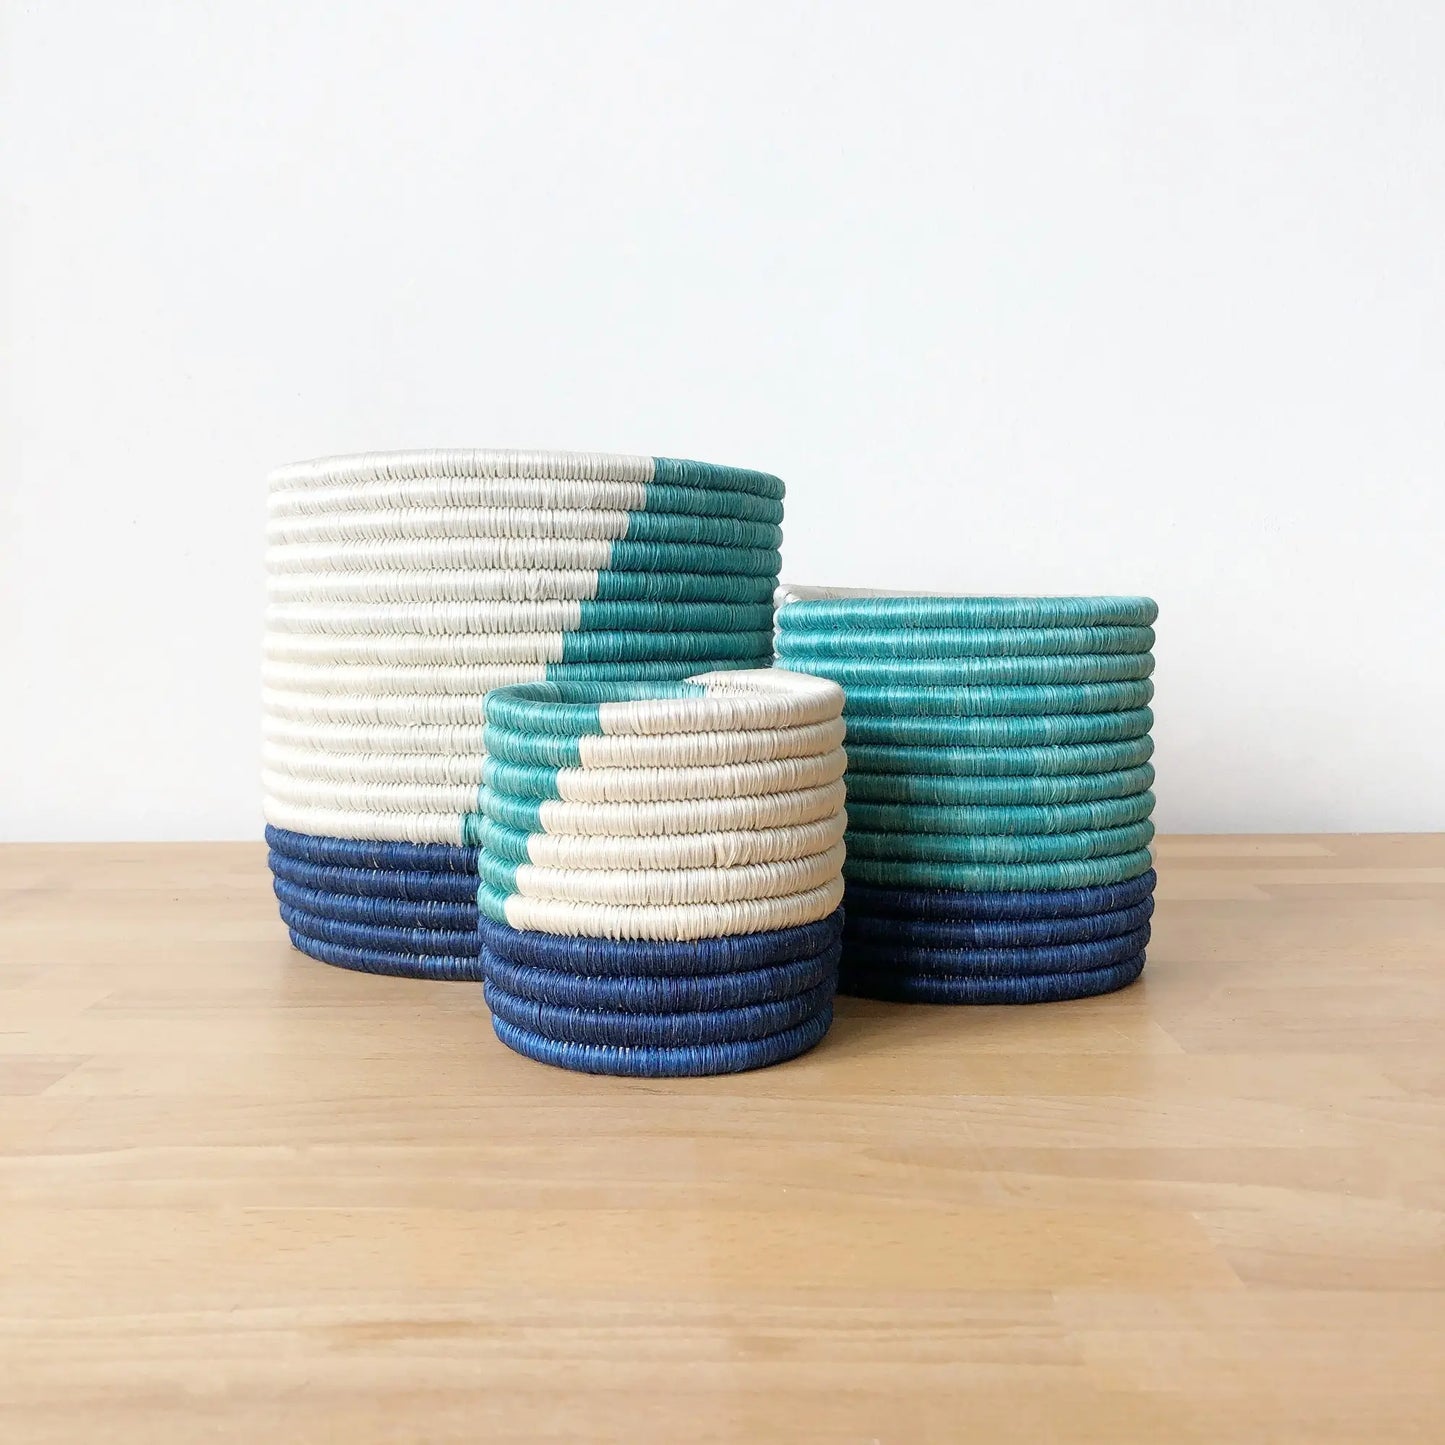 Artisan basket - set of 3 by Amsha